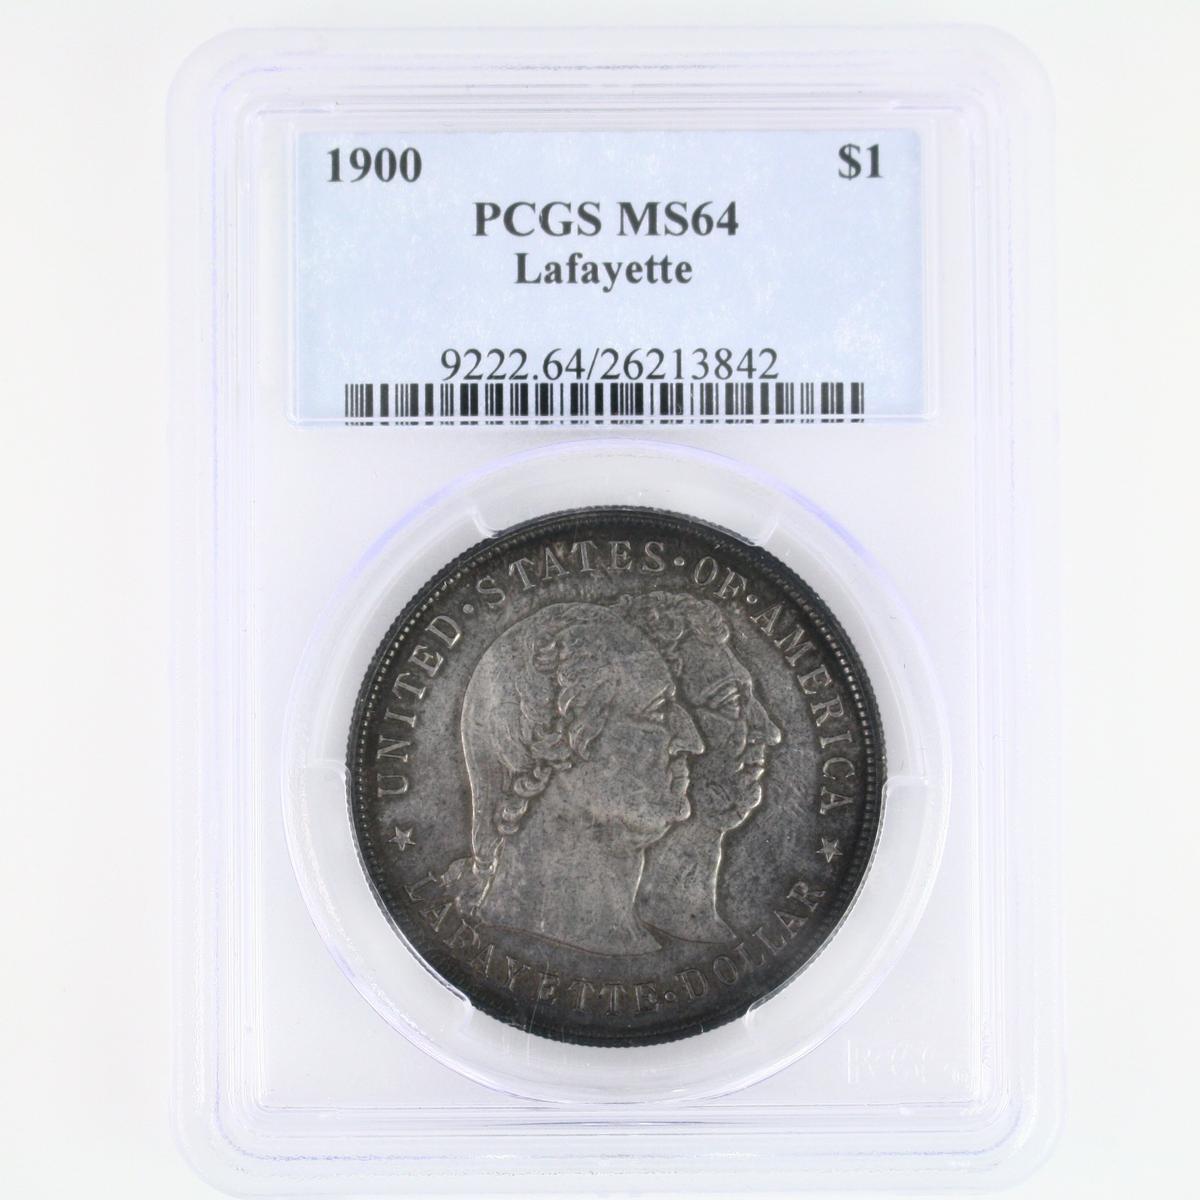 Certified 1900 U.S. Lafayette commemorative silver dollar